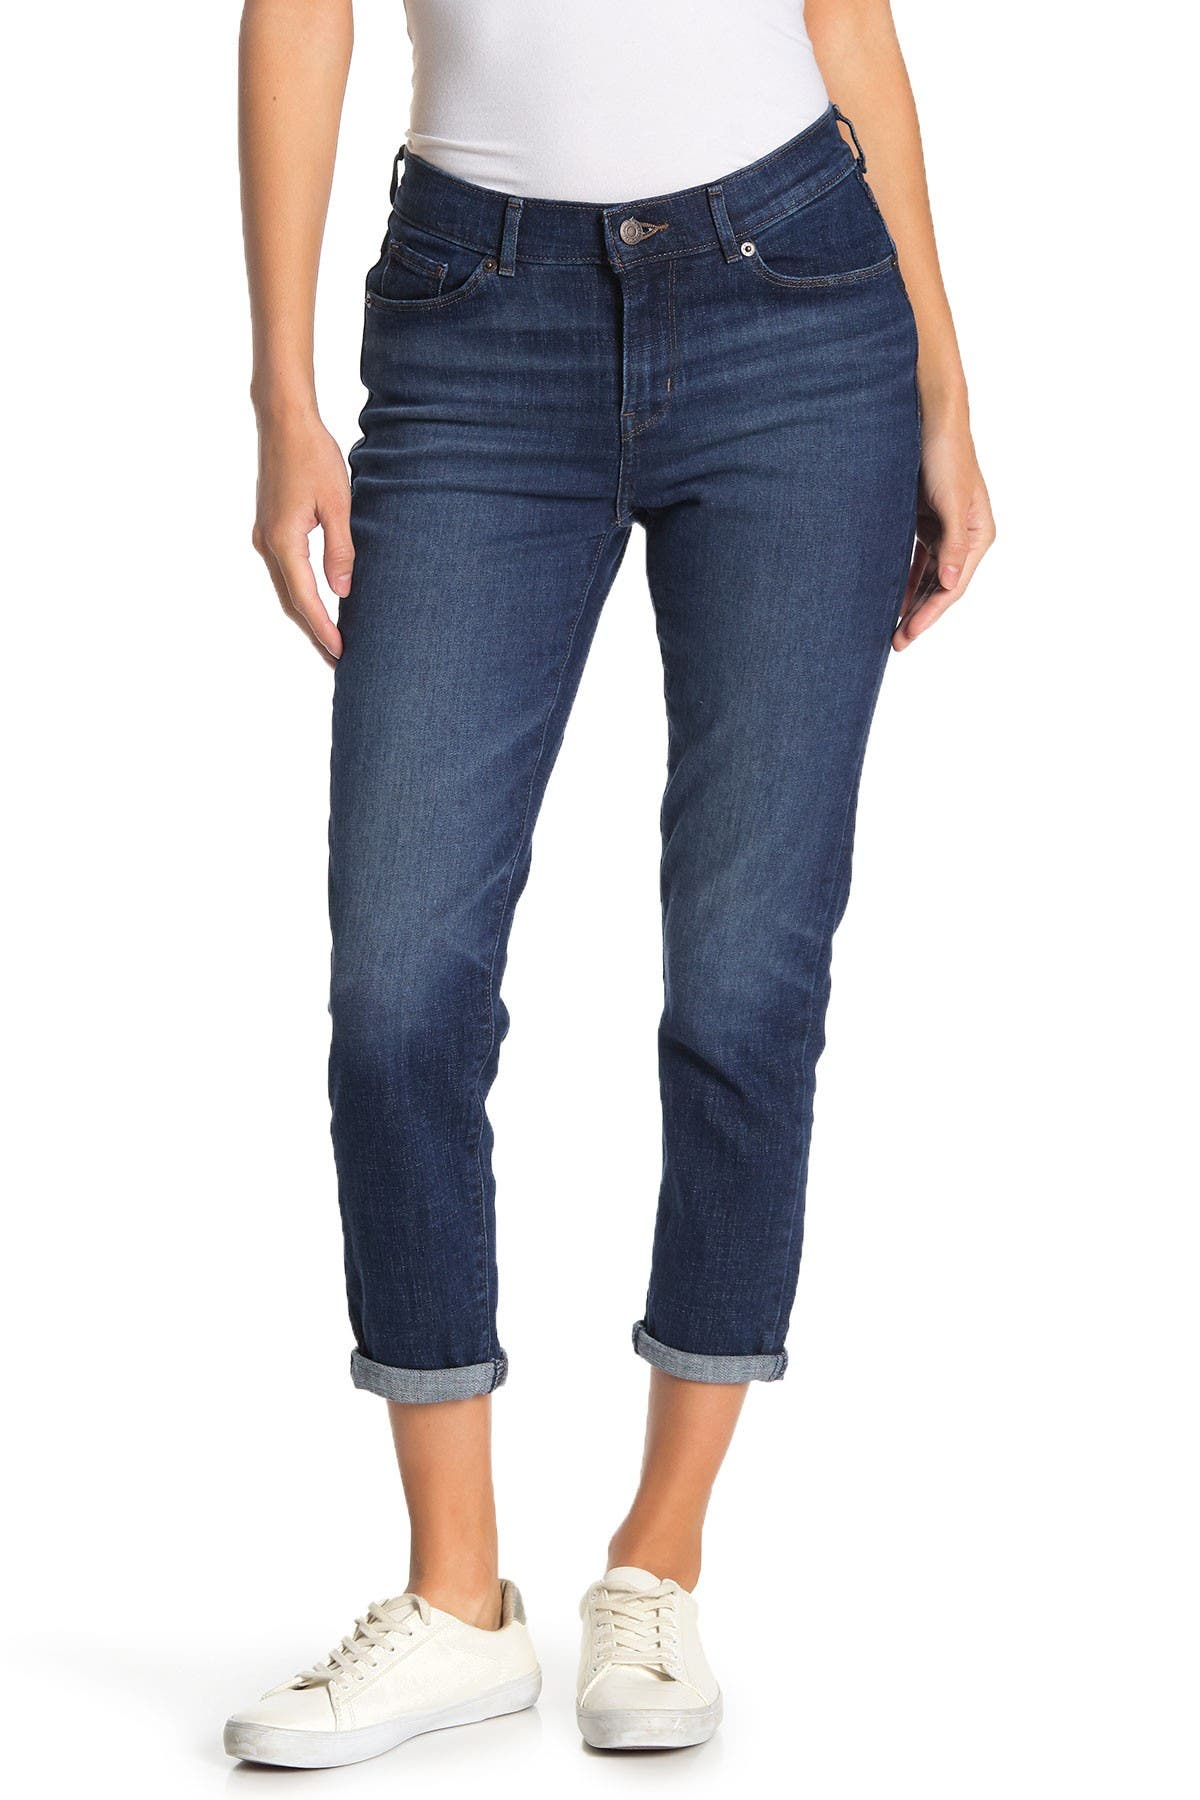 levi's classic capri jeans